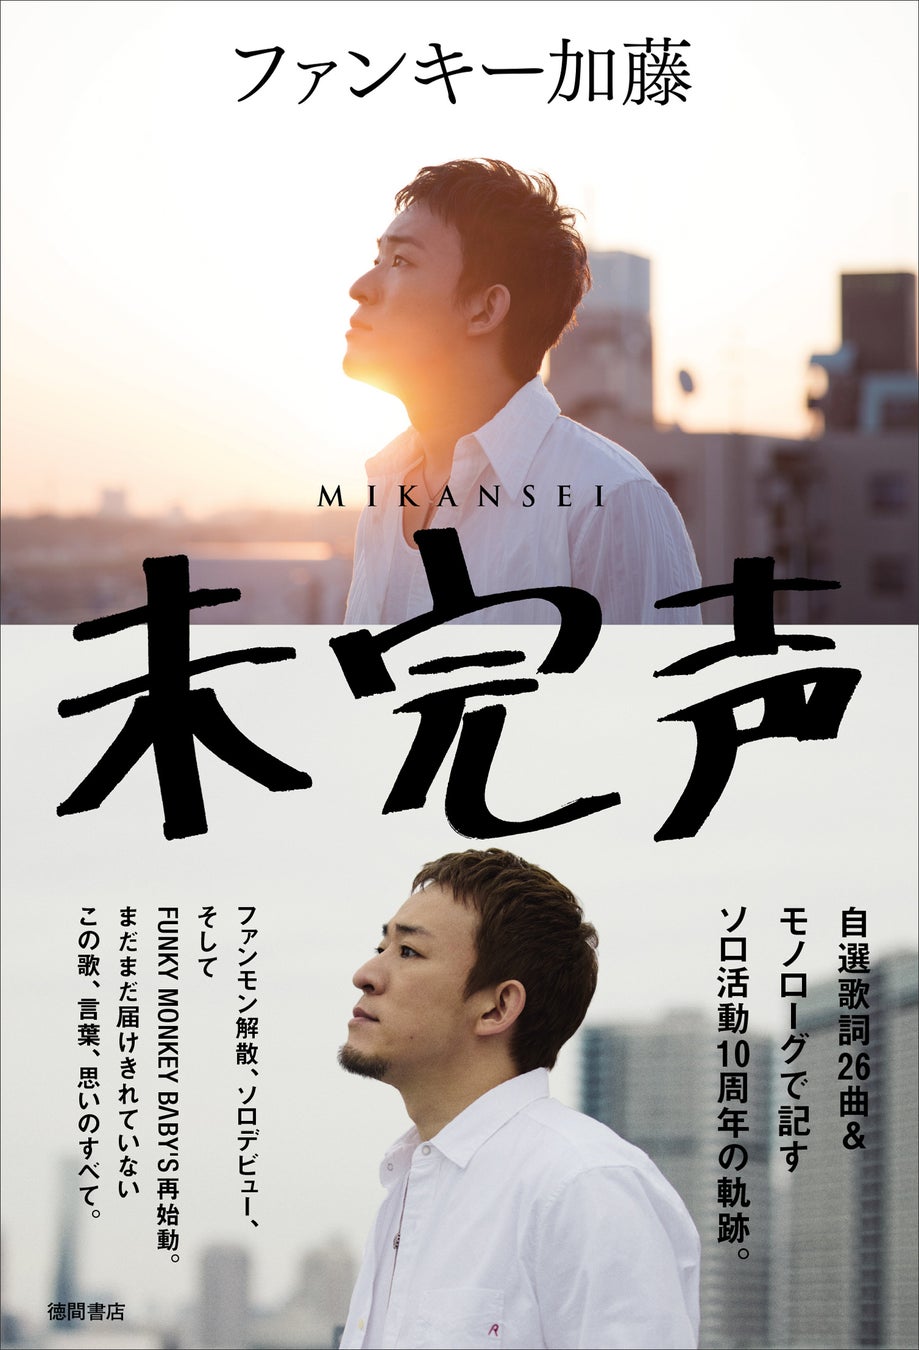 YOASOBI 新曲「モノトーン」が、10/4(金)公開 映画『ふれる。』主題歌に決定！自身初のアニメ映画主題歌を担当＆本人コメントも到着！